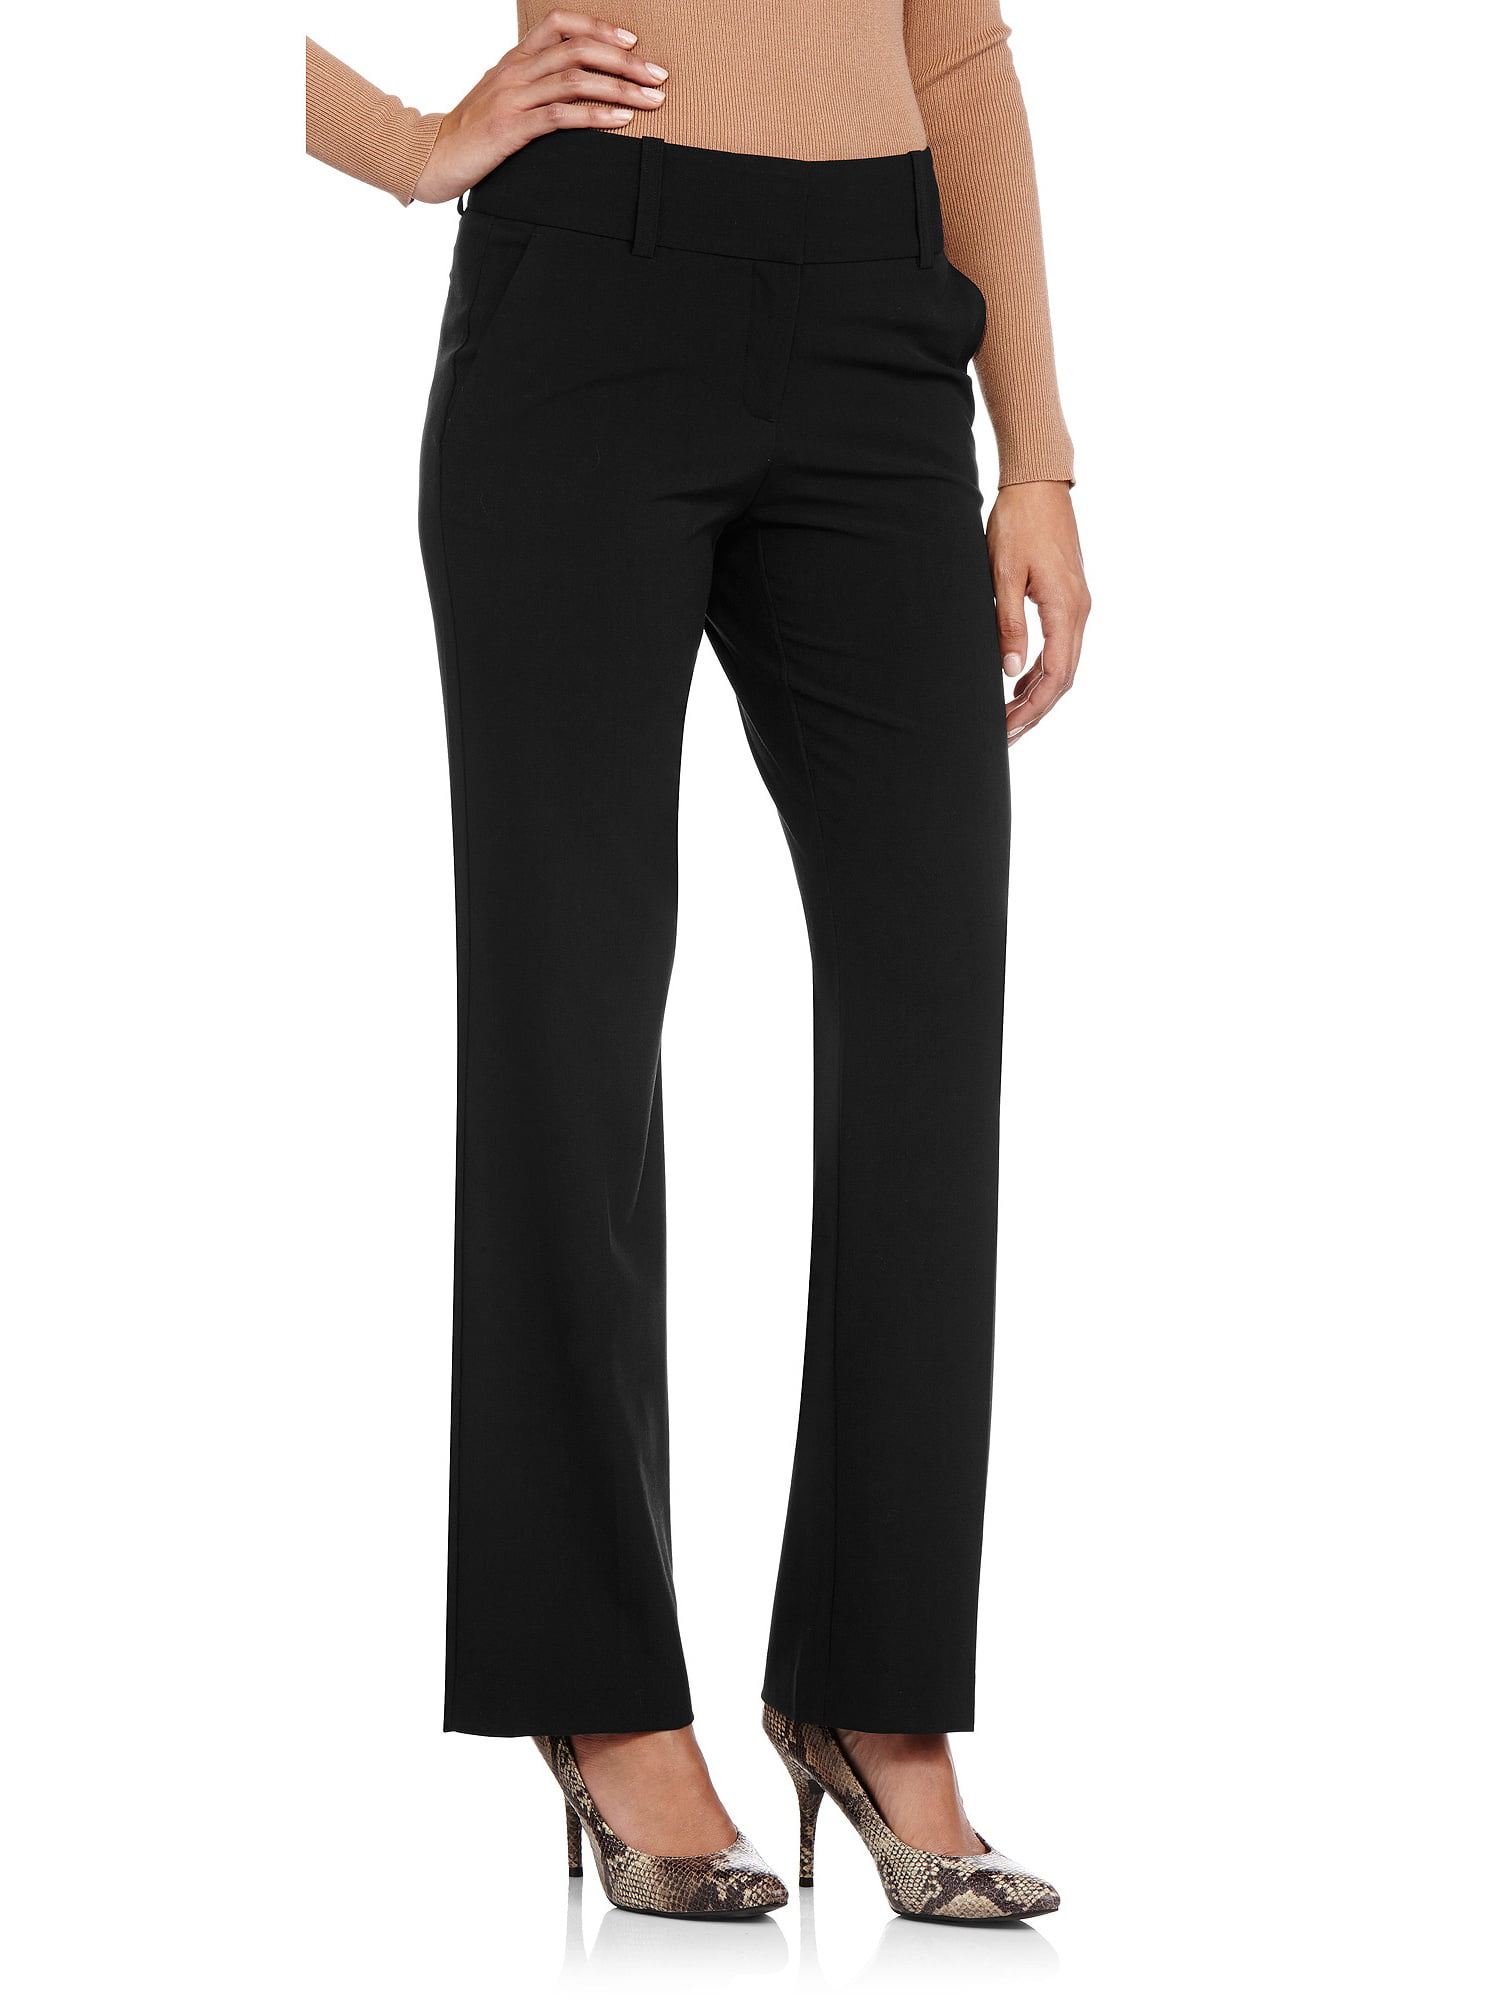 Women's Classic Fit Pants - Walmart.com